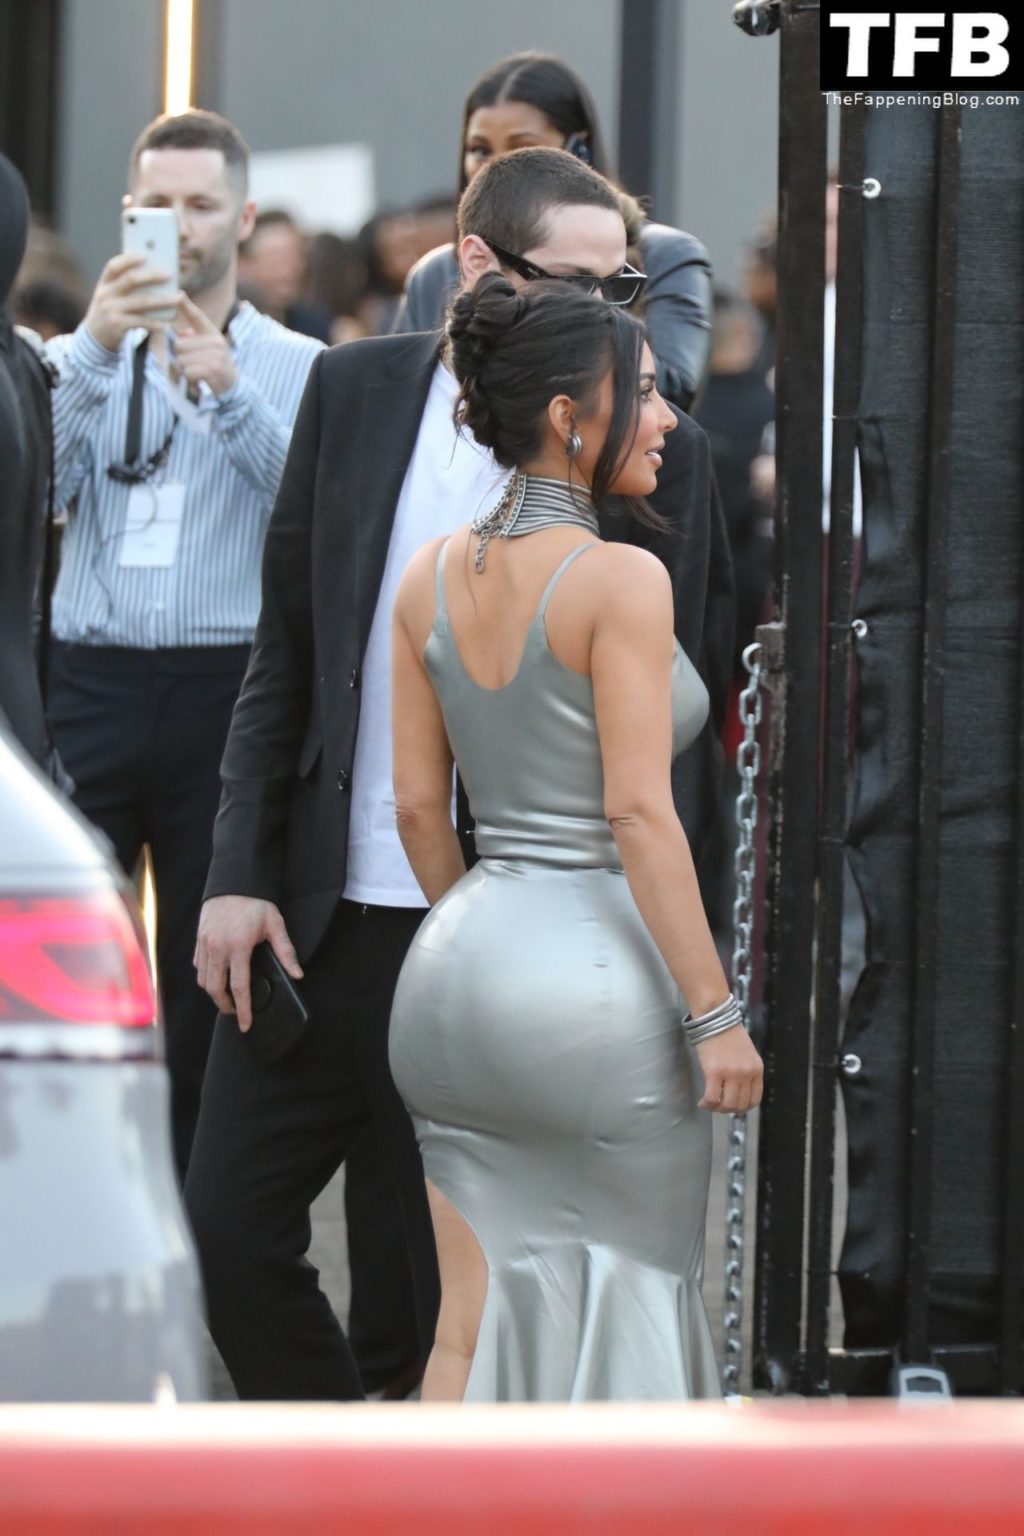 Kim Kardashian &amp; Pete Davidson Make a Grand Entrance to HULU’s “The Kardashian’s” Event (18 Photos)